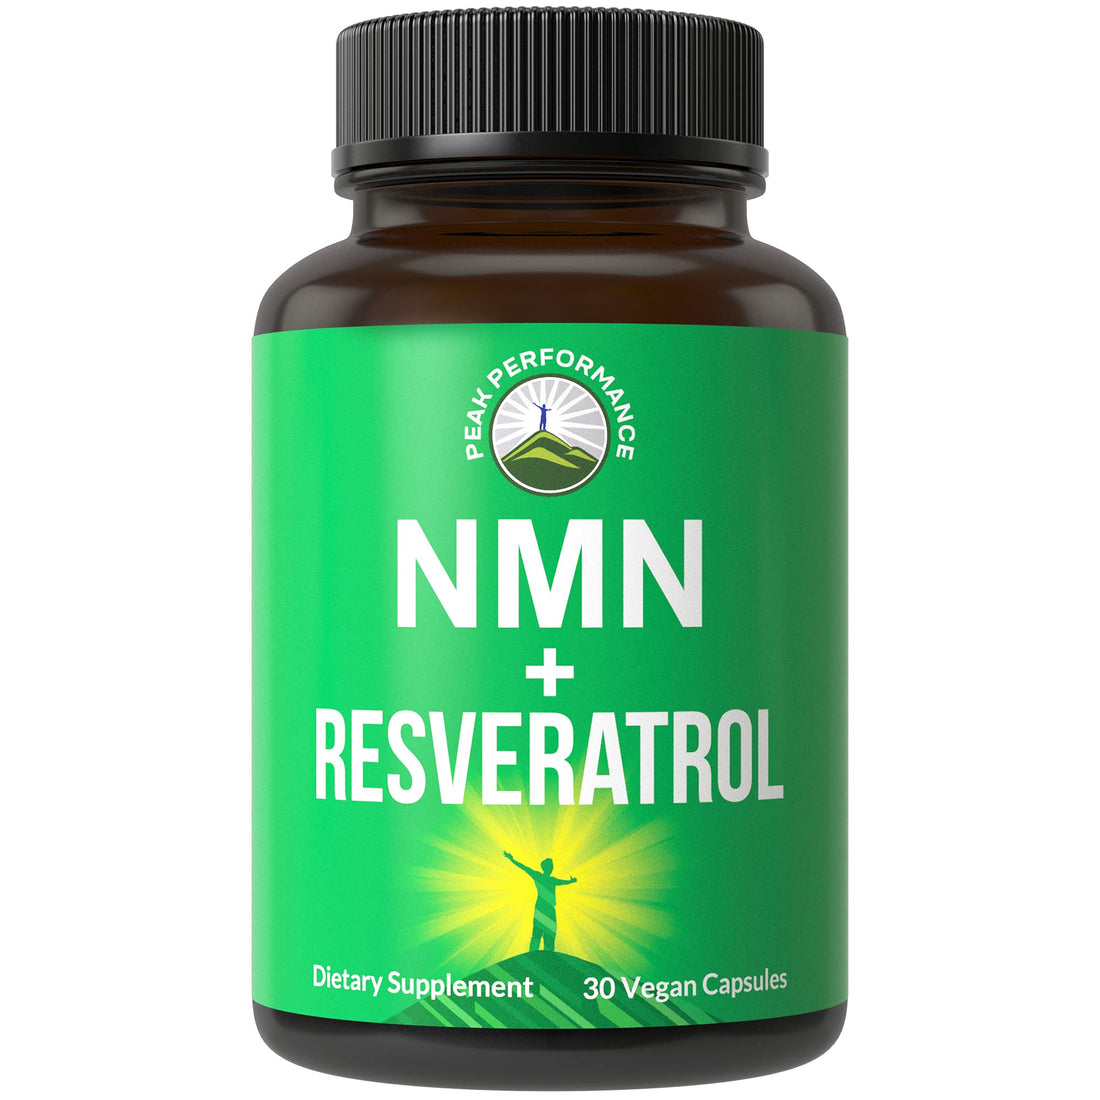 Peak Performance NMN + Resveratrol Review